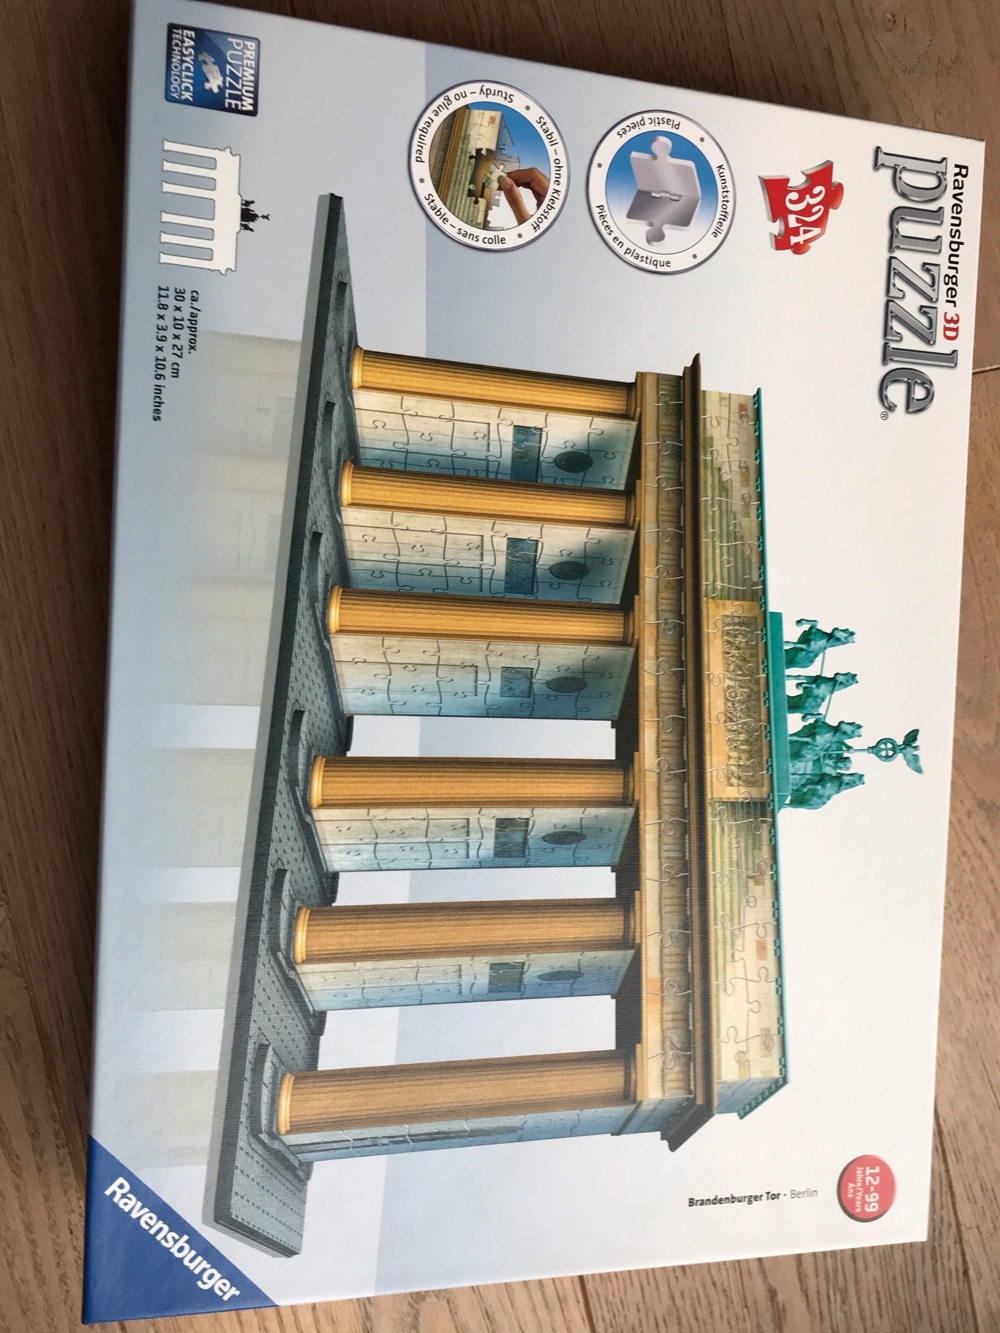 Ravensburger 3D-Puzzle Brandenburger Tor, neu